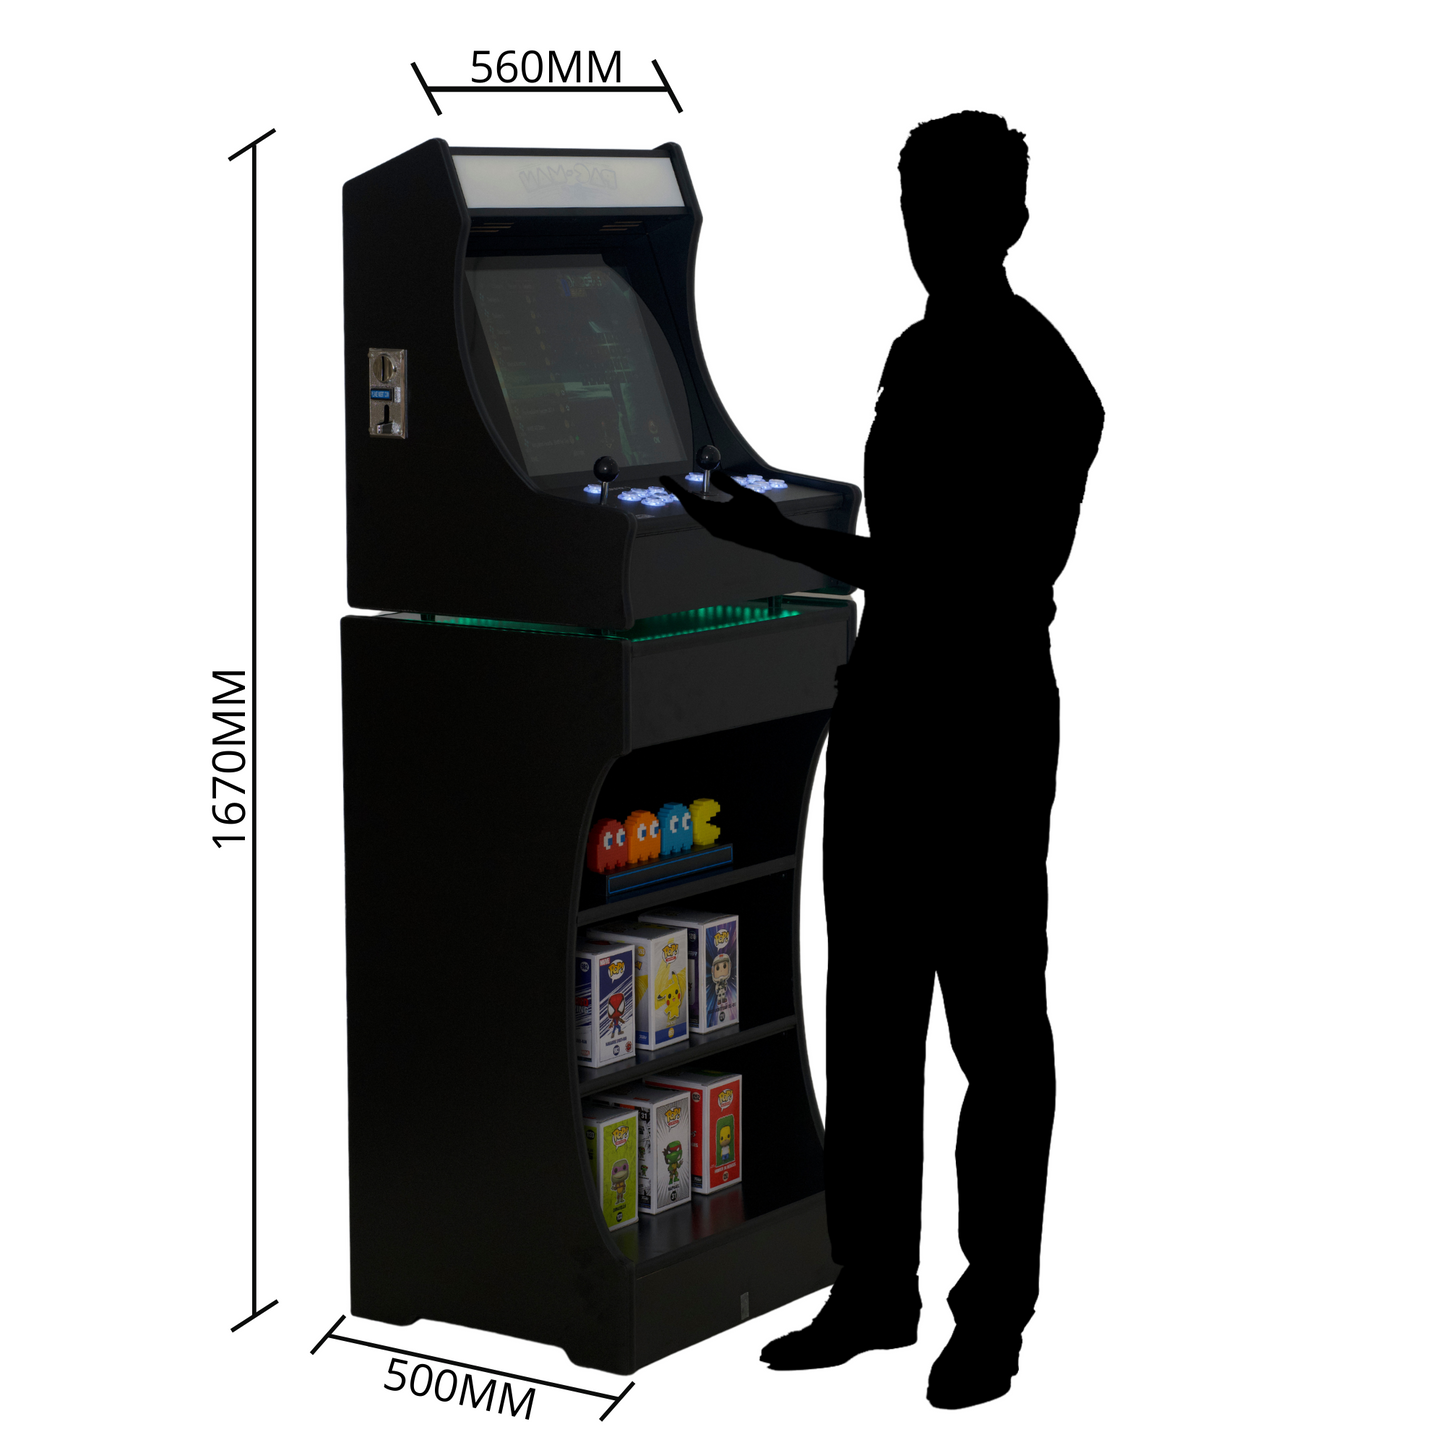 Upright 19" Arcade Machine